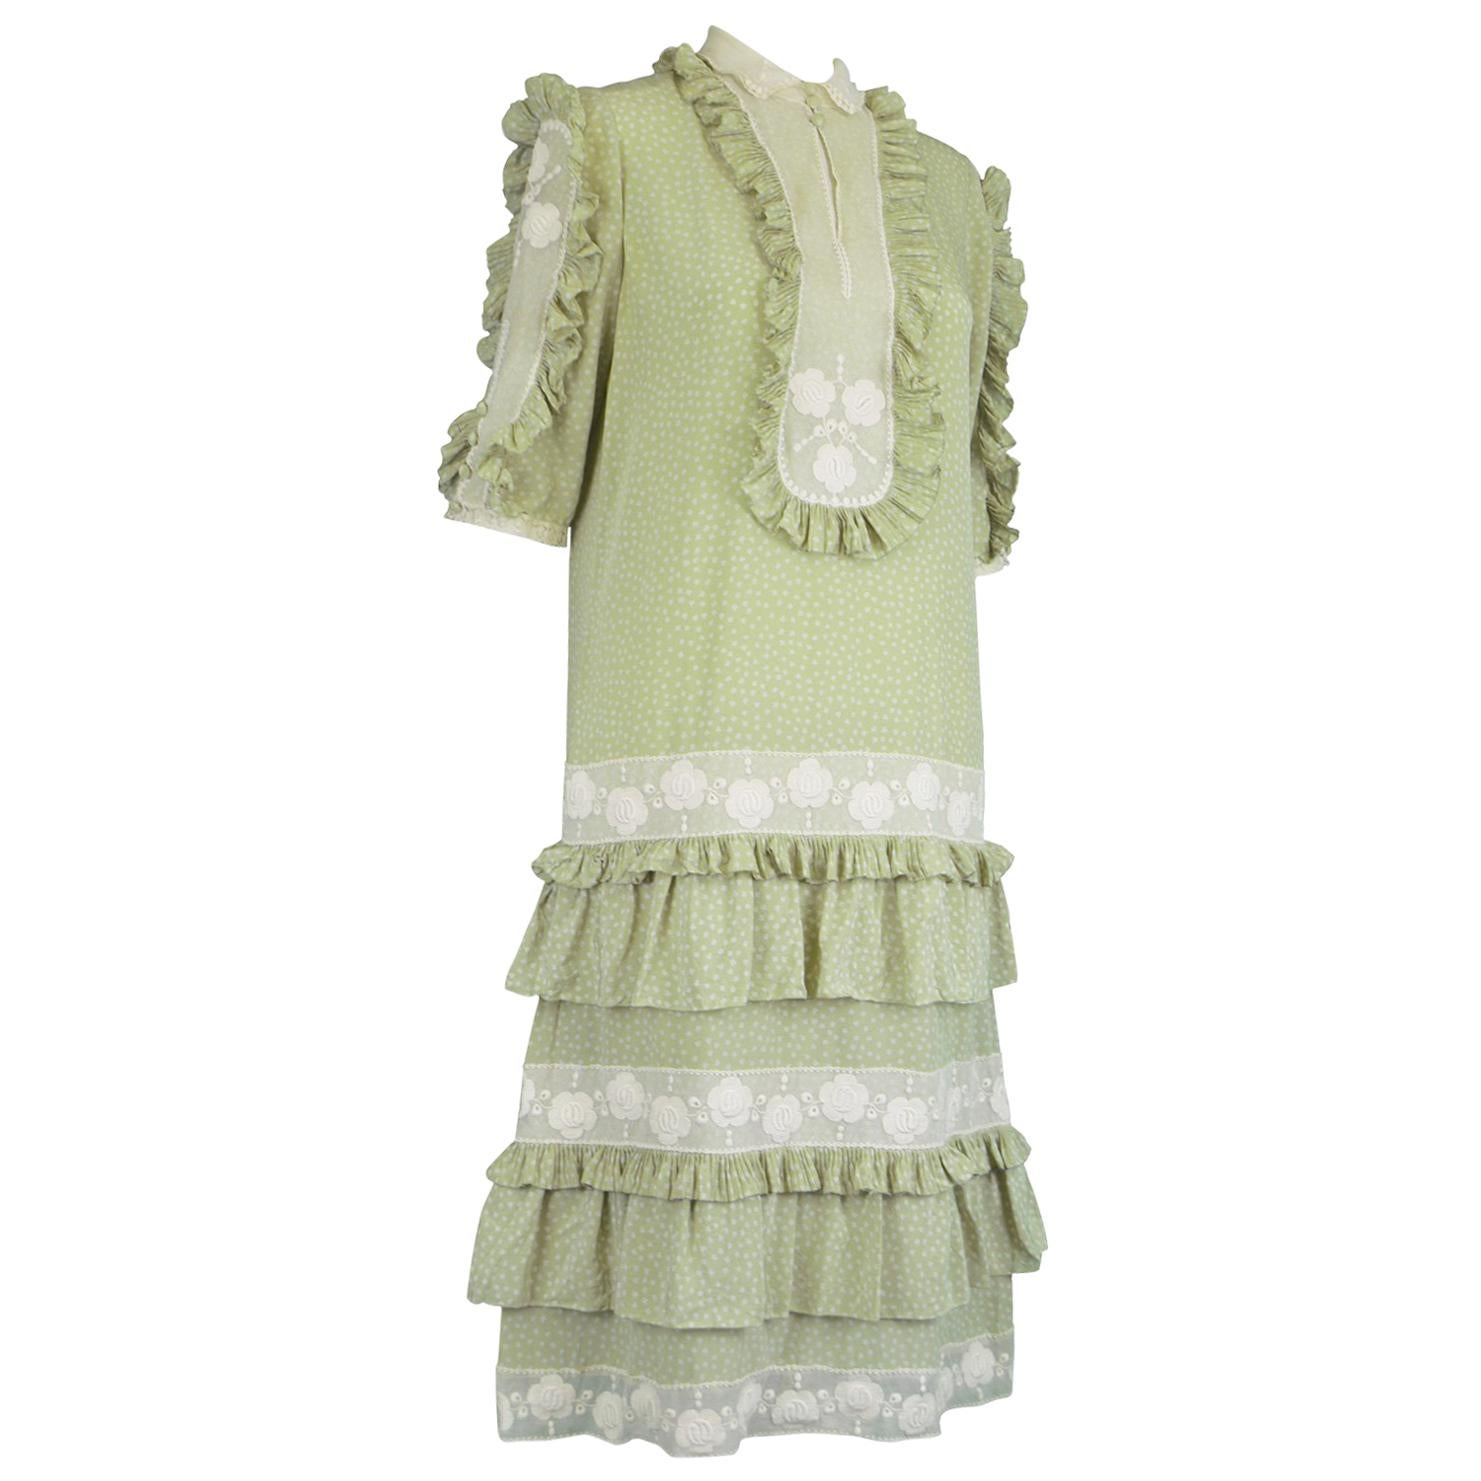 Chloe by Karl Lagerfeld 1970s Vintage Pastel Green Ruffled Silk & Lace Dress